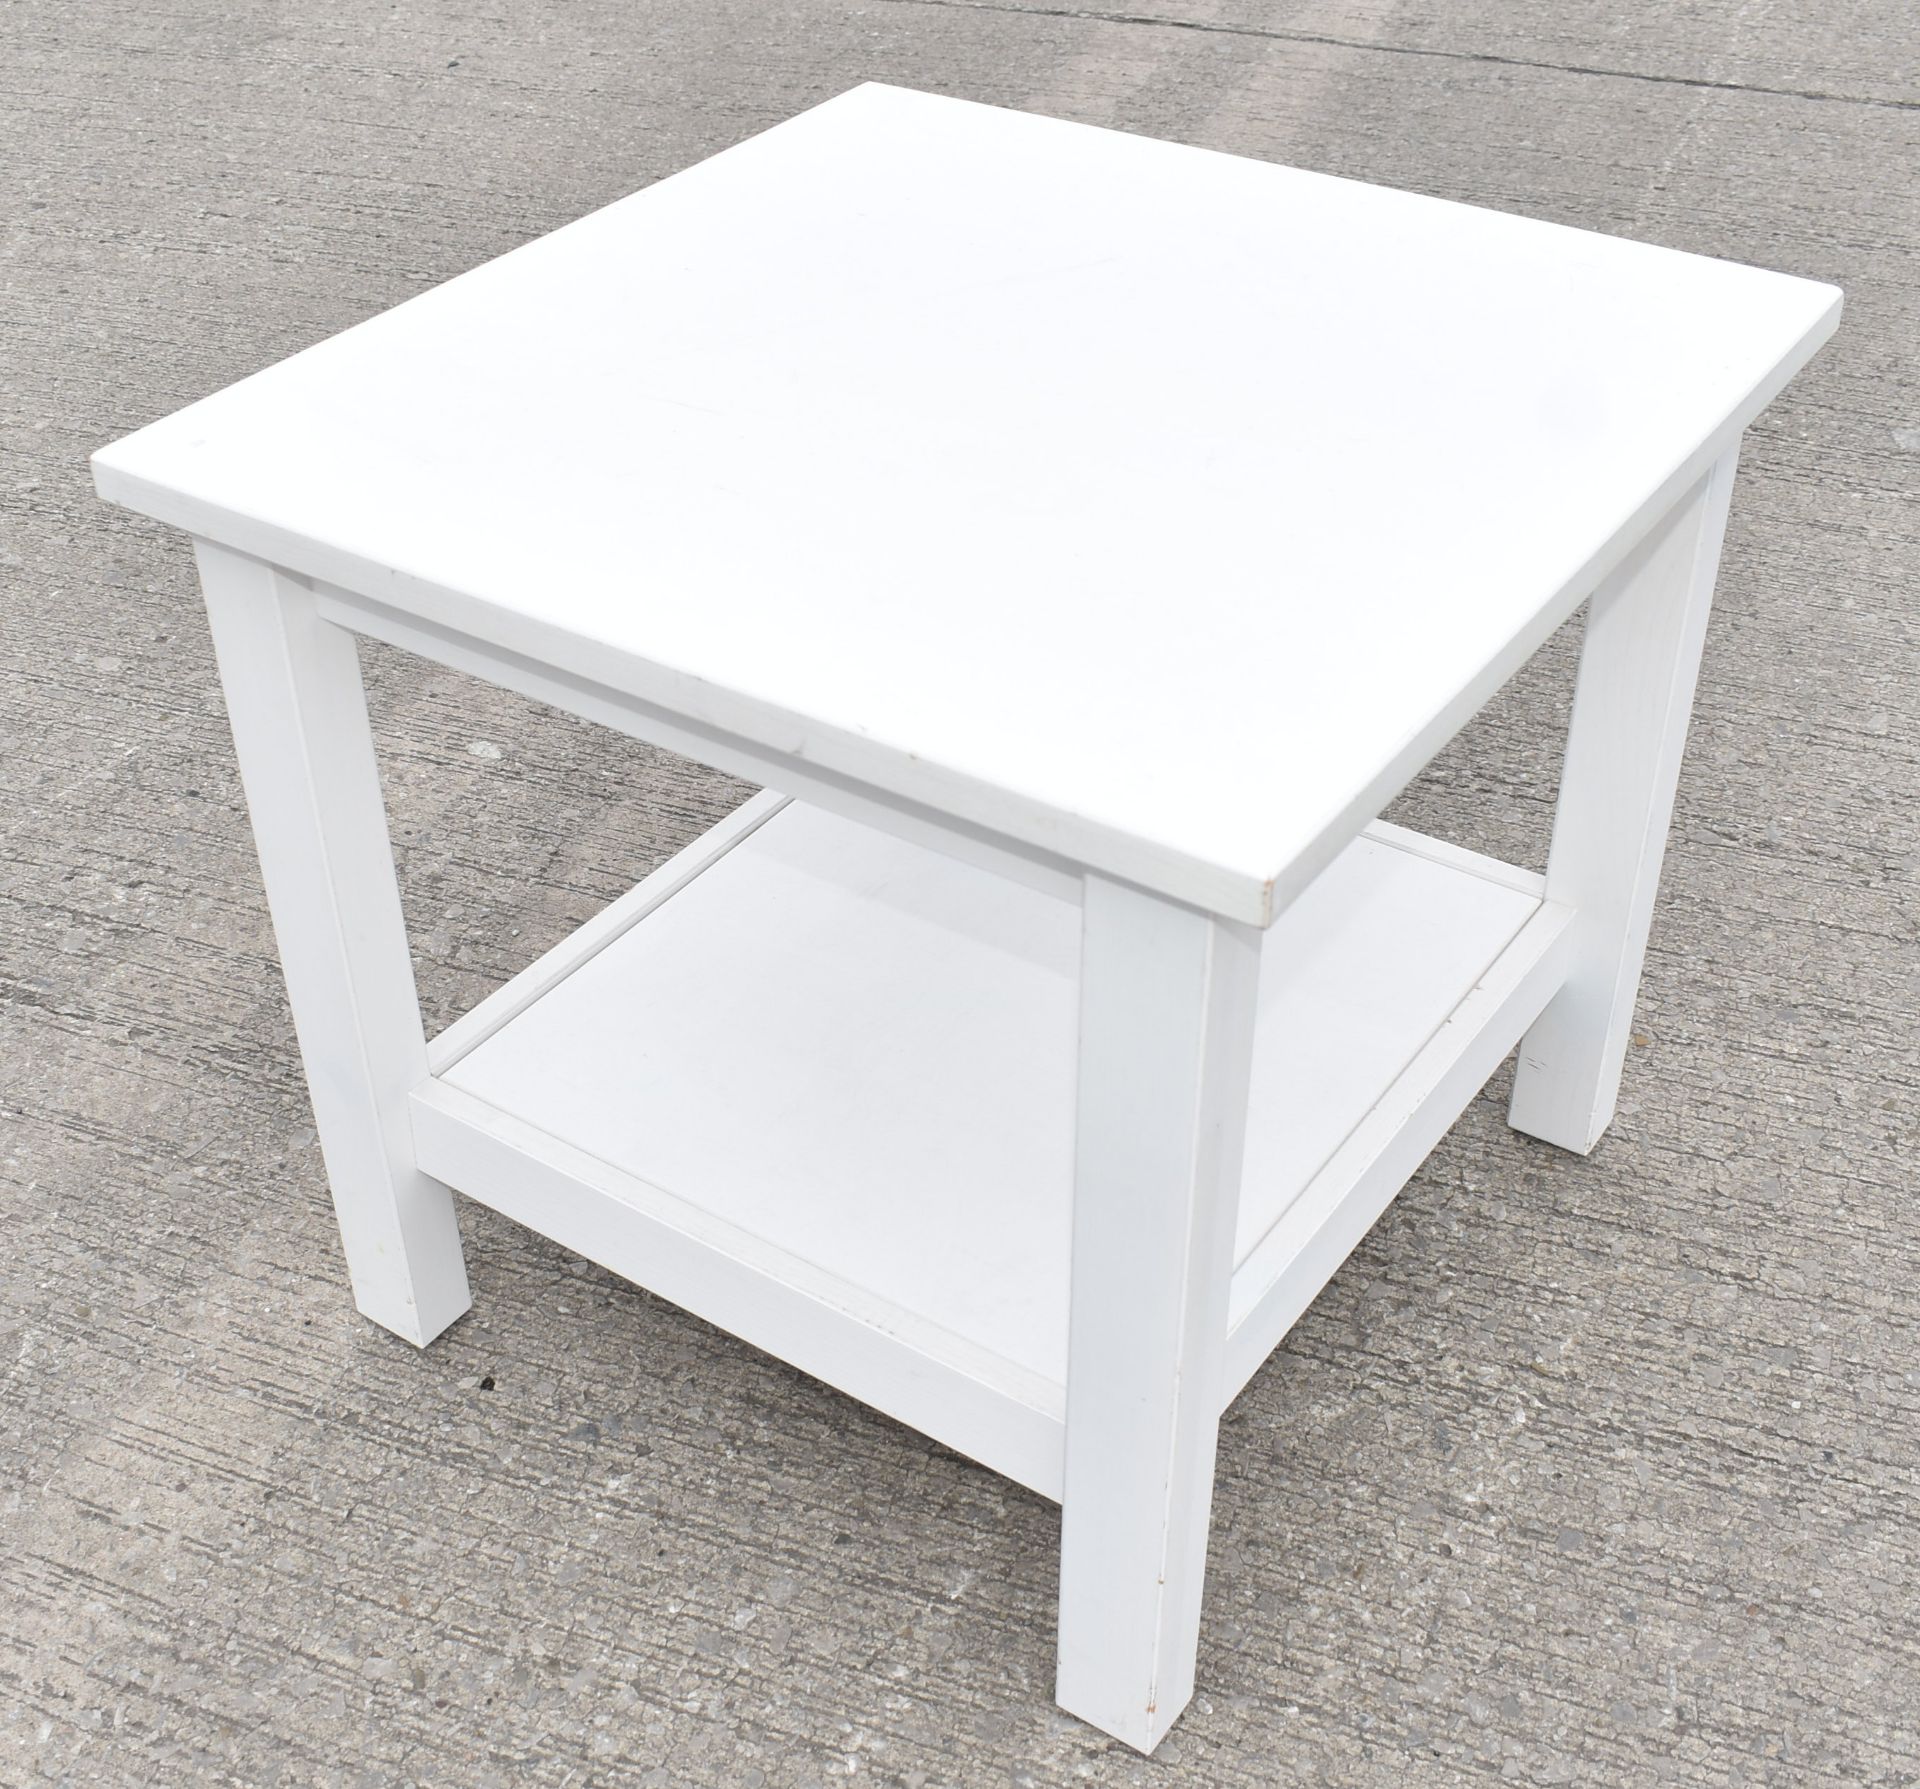 1 x White Square Wooden Table - 56x56x51cm - Ref: K289 - CL905 - Location: Altrincham WA14*Stock - Image 3 of 9